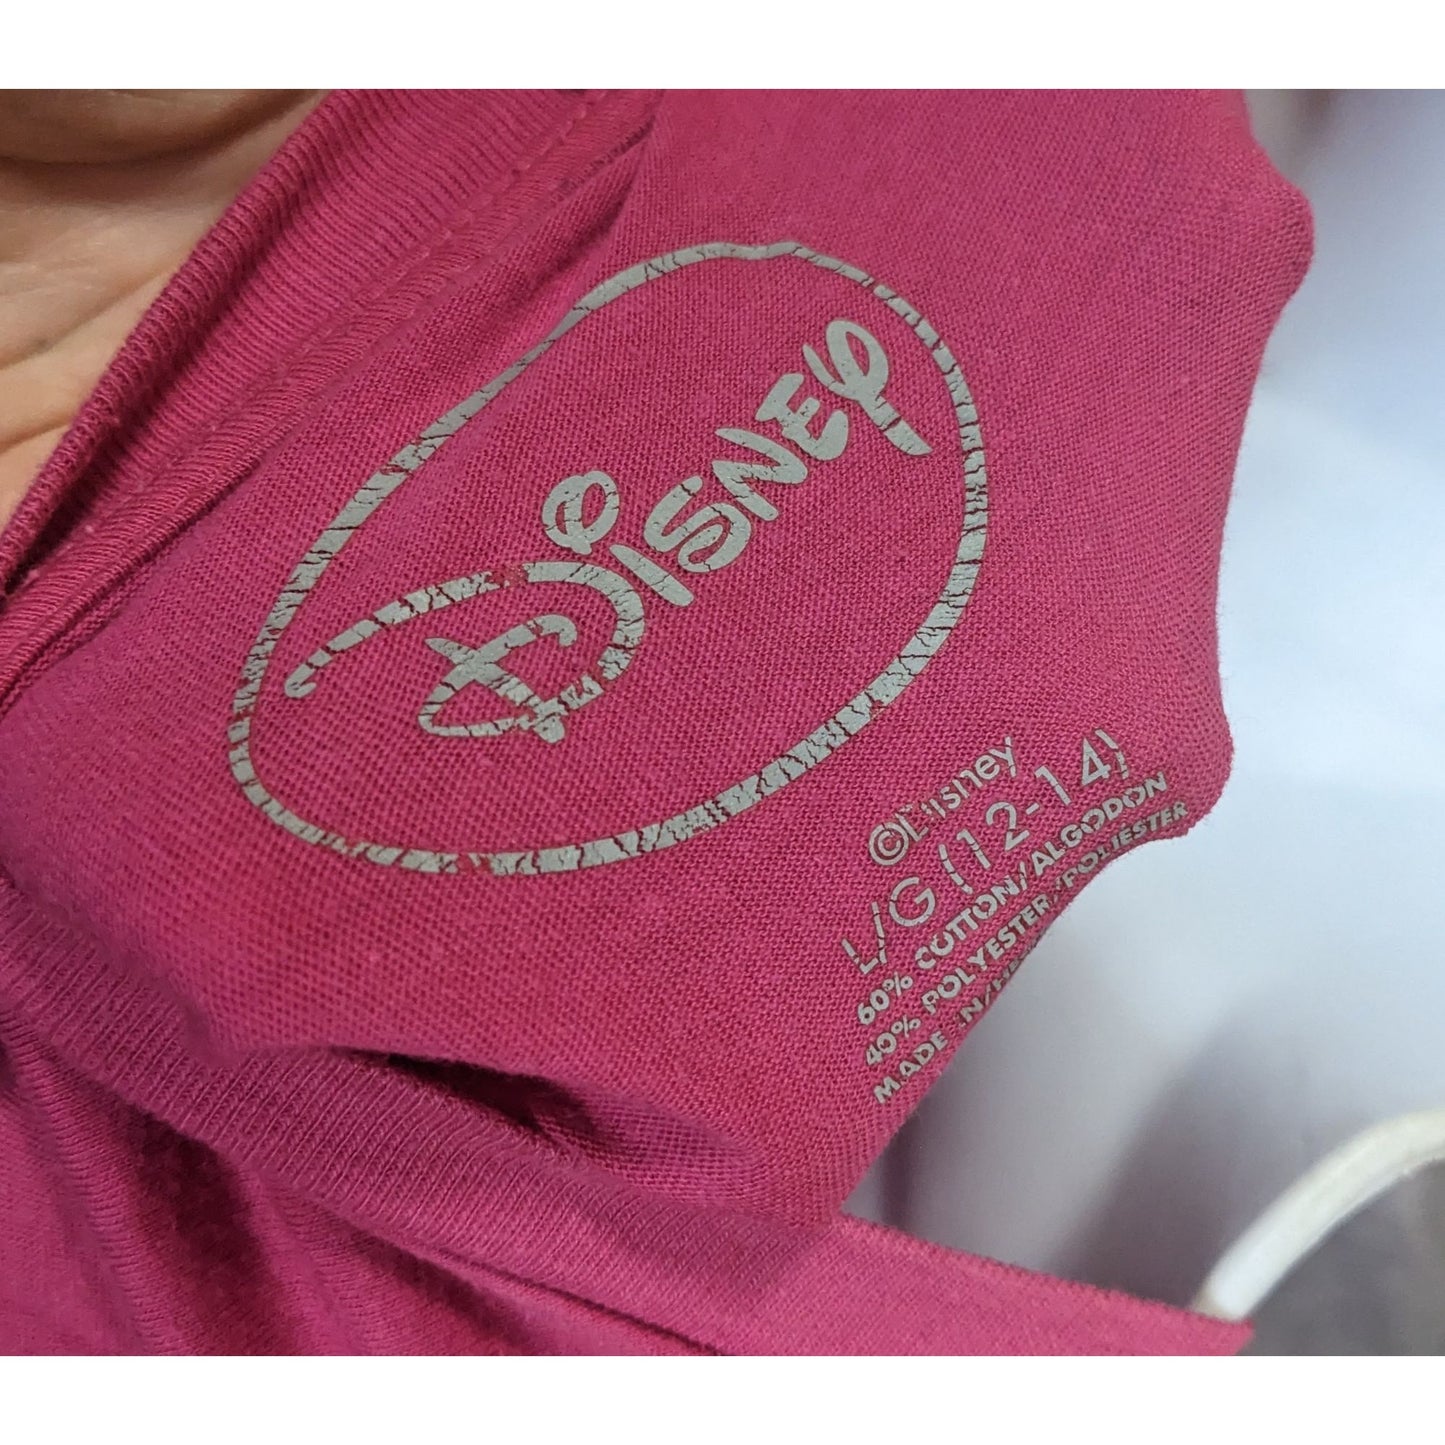 Disney Mickey Mouse Pink Shirt